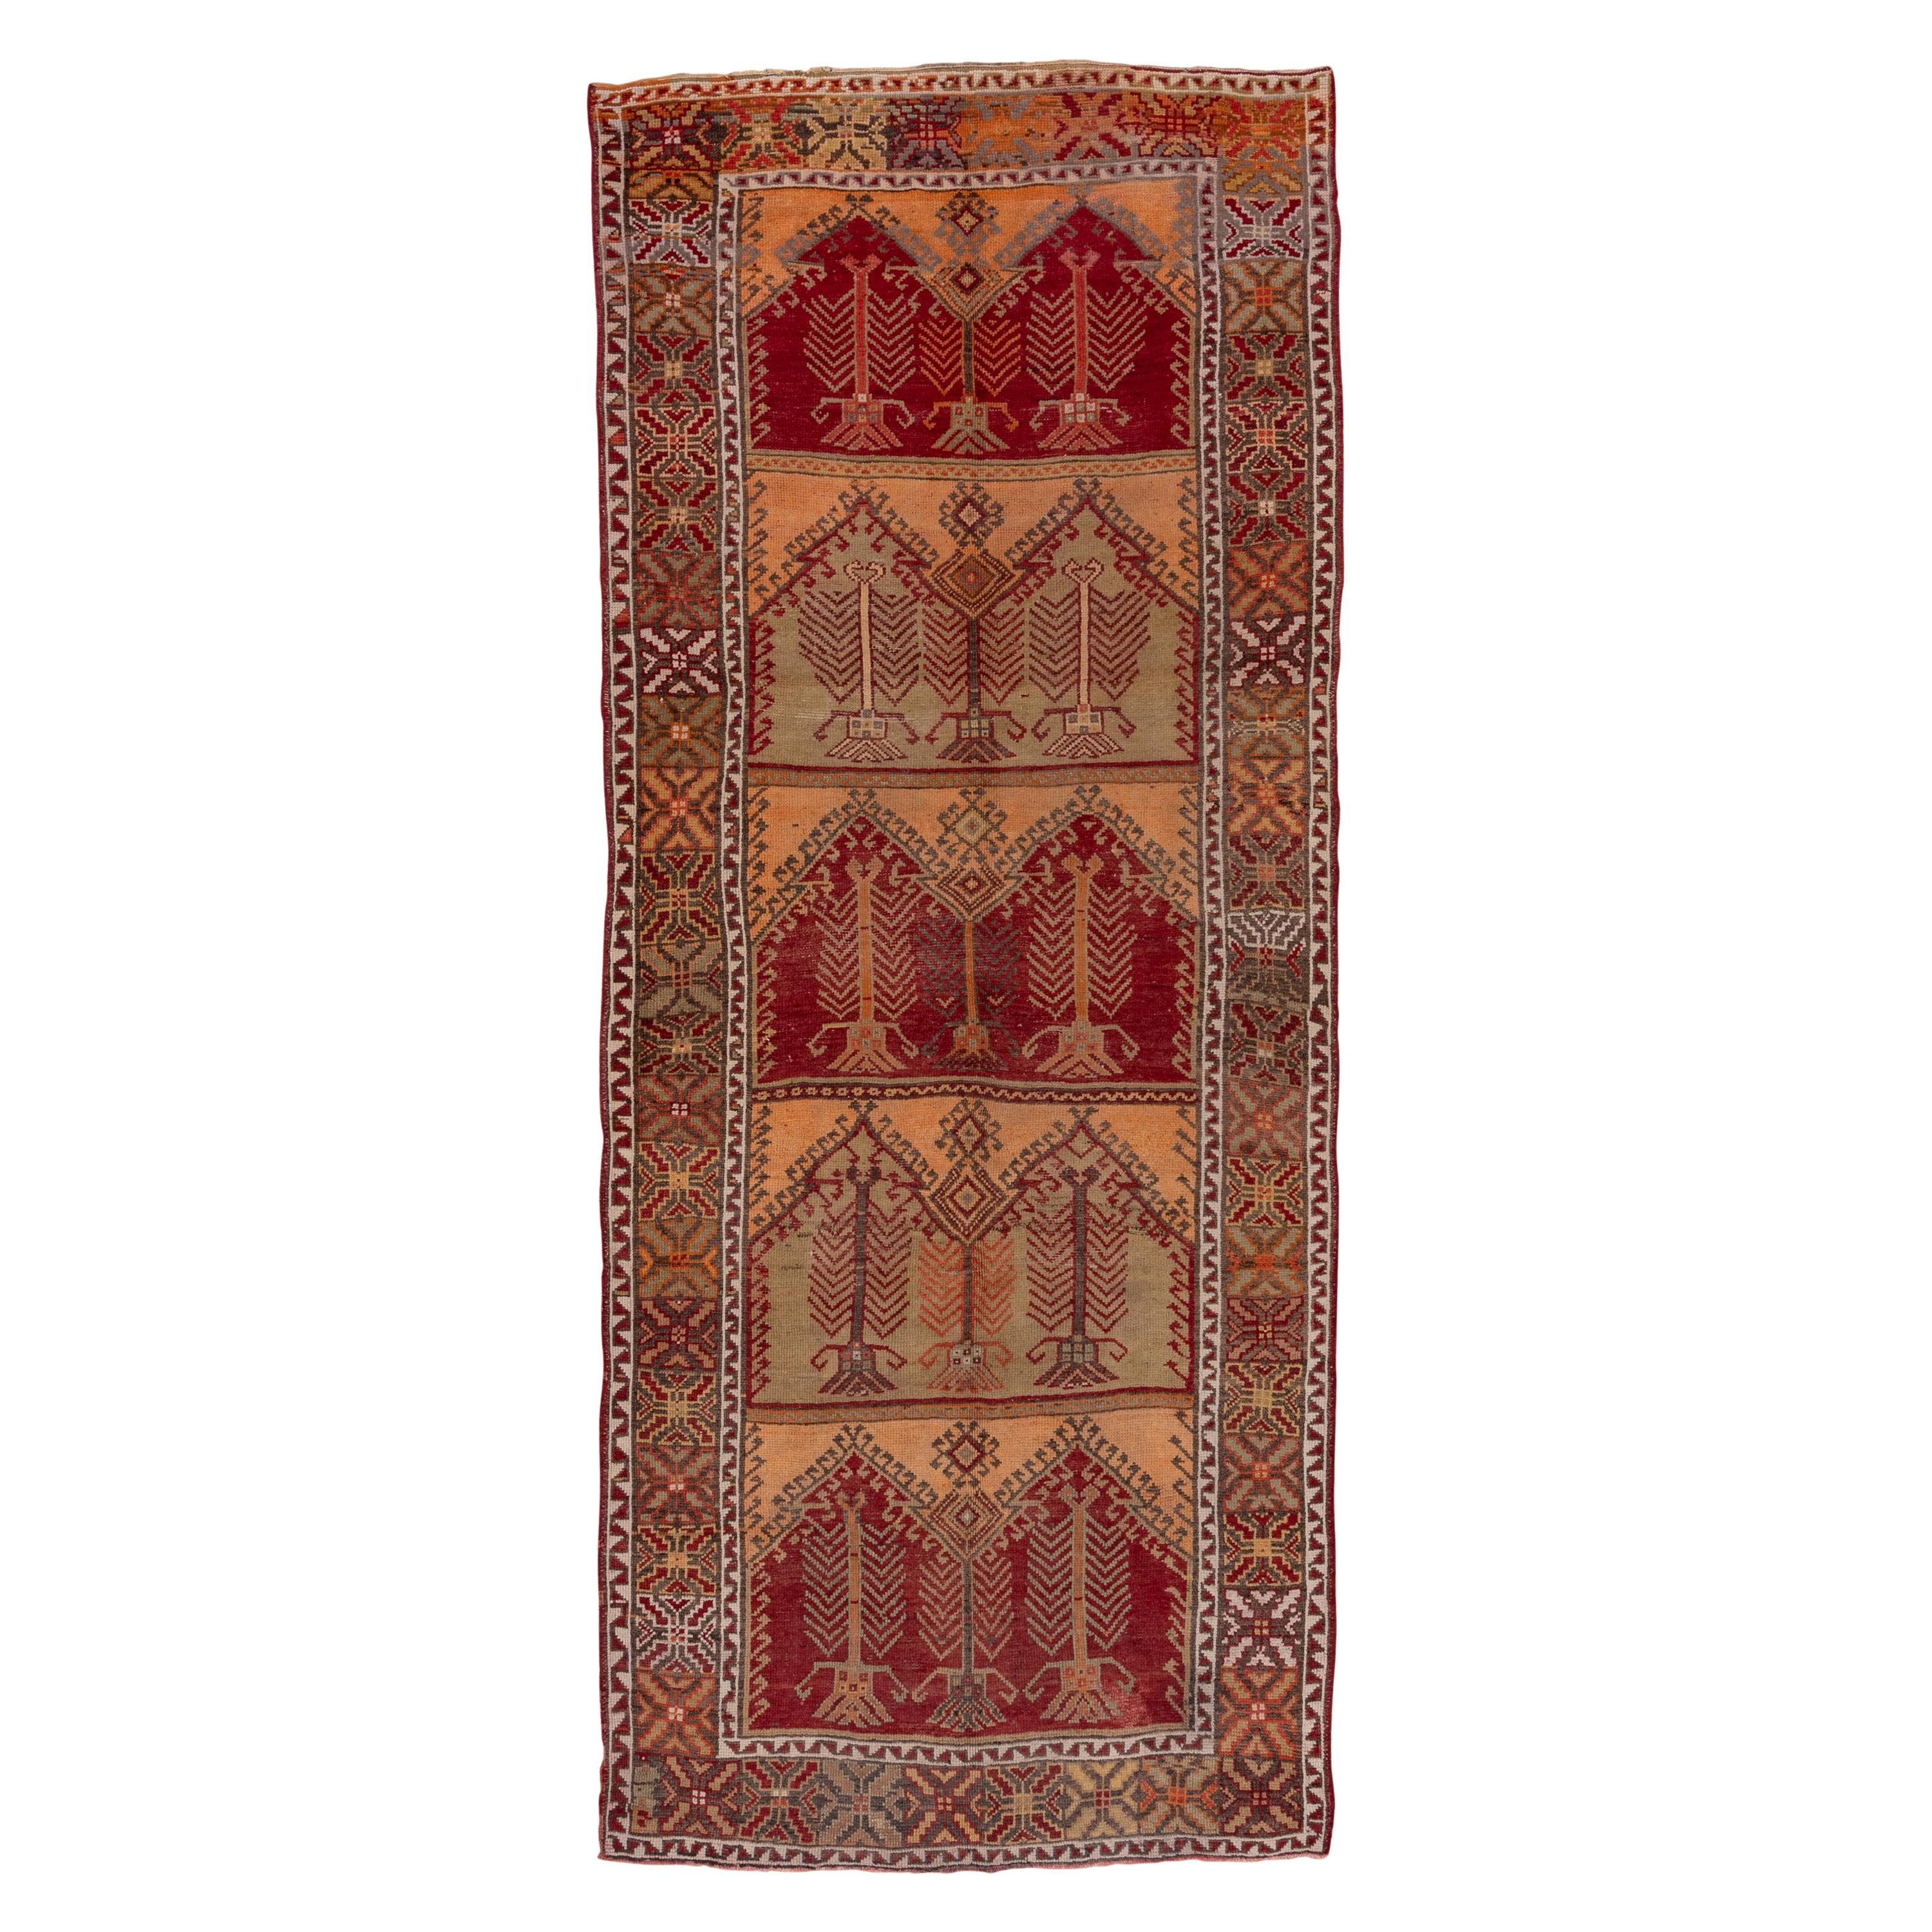 Antique Rustic Turkish Anatolian Gallery Carpet, Warm Colors, circa 1930s